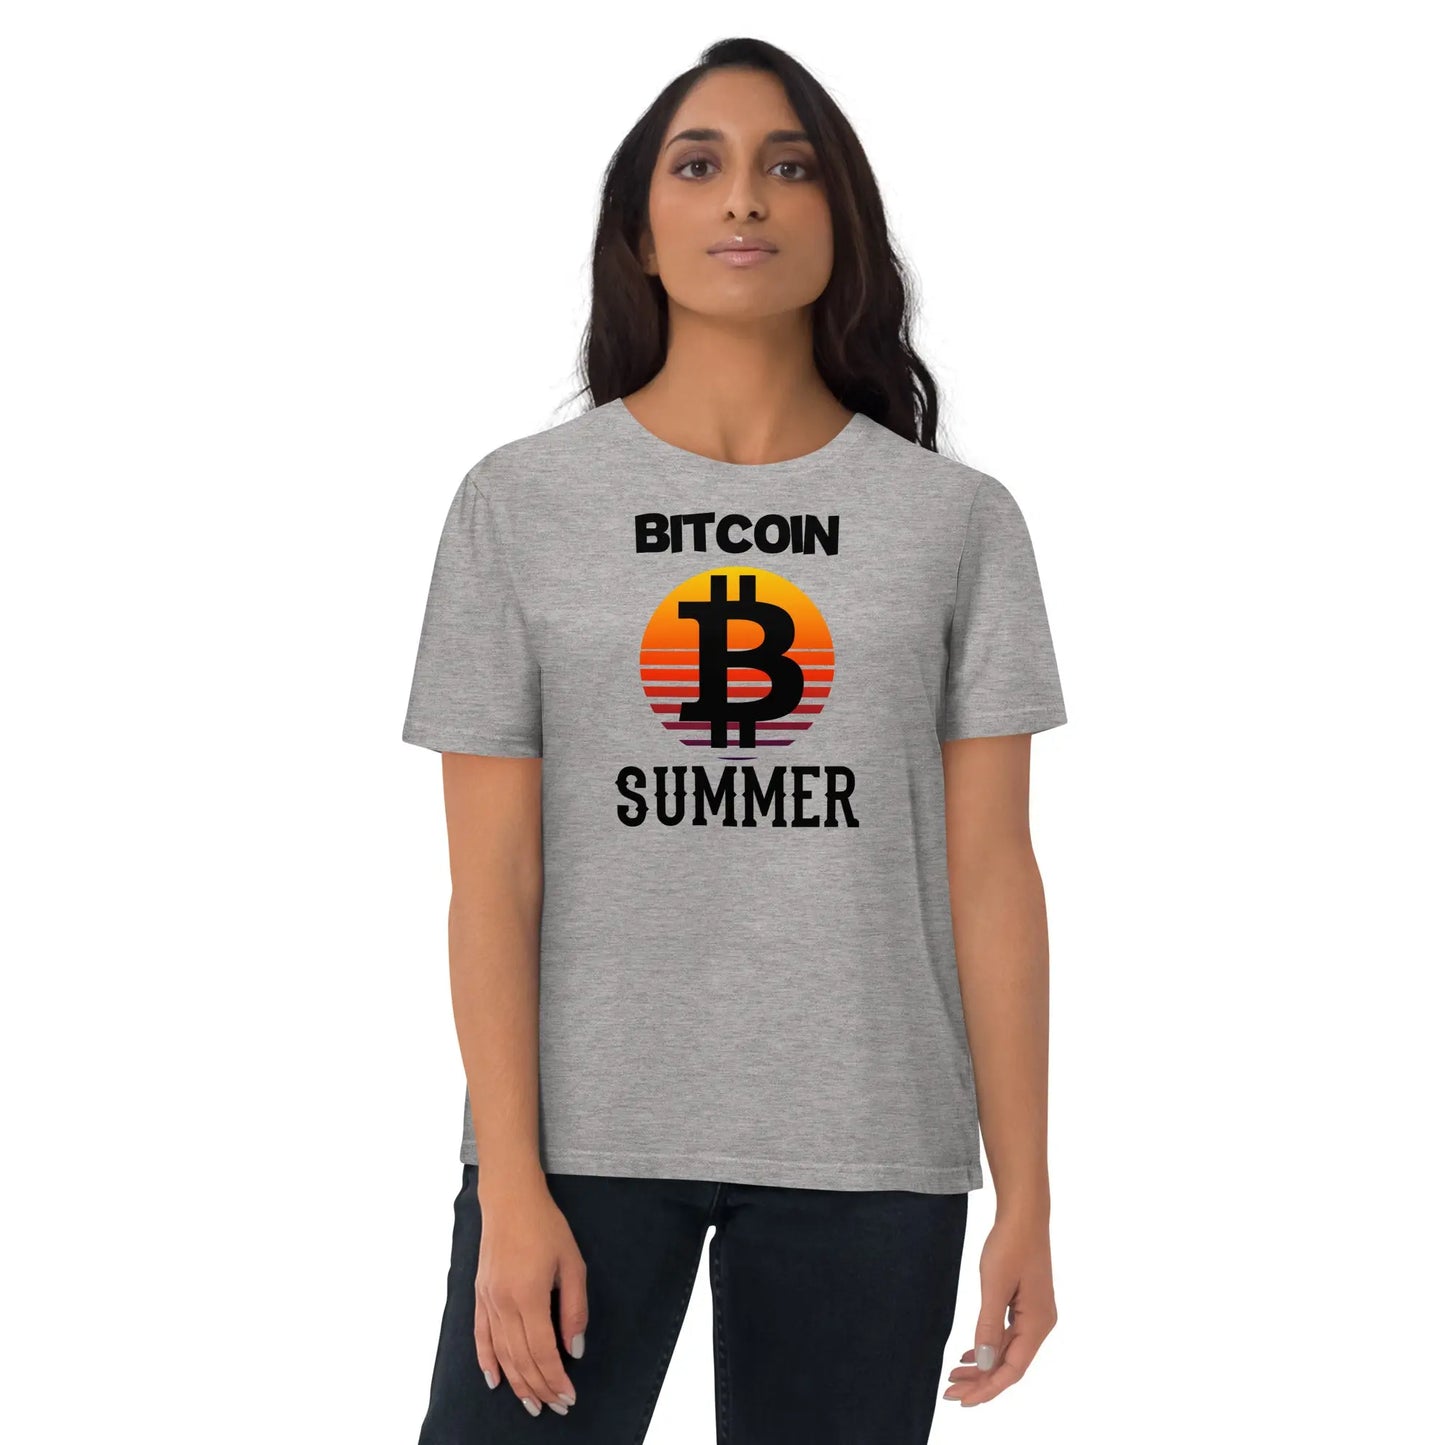 Bitcoin Summer - Premium Unisex Organic Cotton Bitcoin T-shirt Grey Color